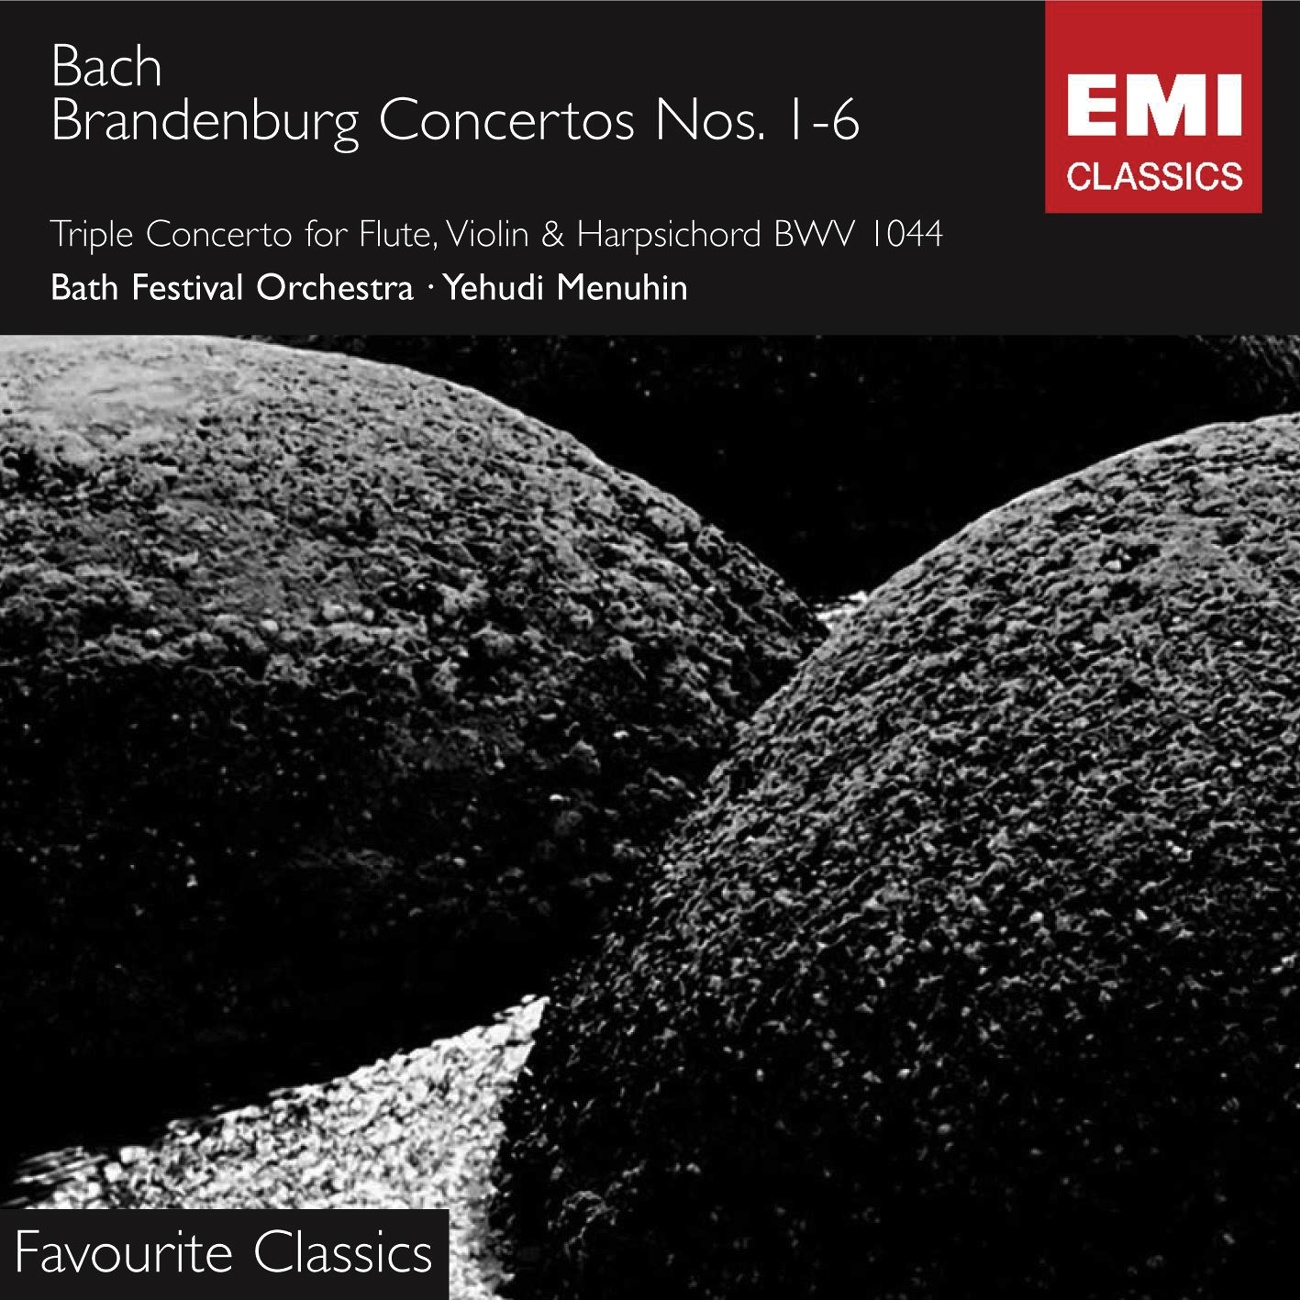 Brandenburg Concerto No. 2 in F BWV1047 (1988 Digital Remaster): I.   [Allegro]